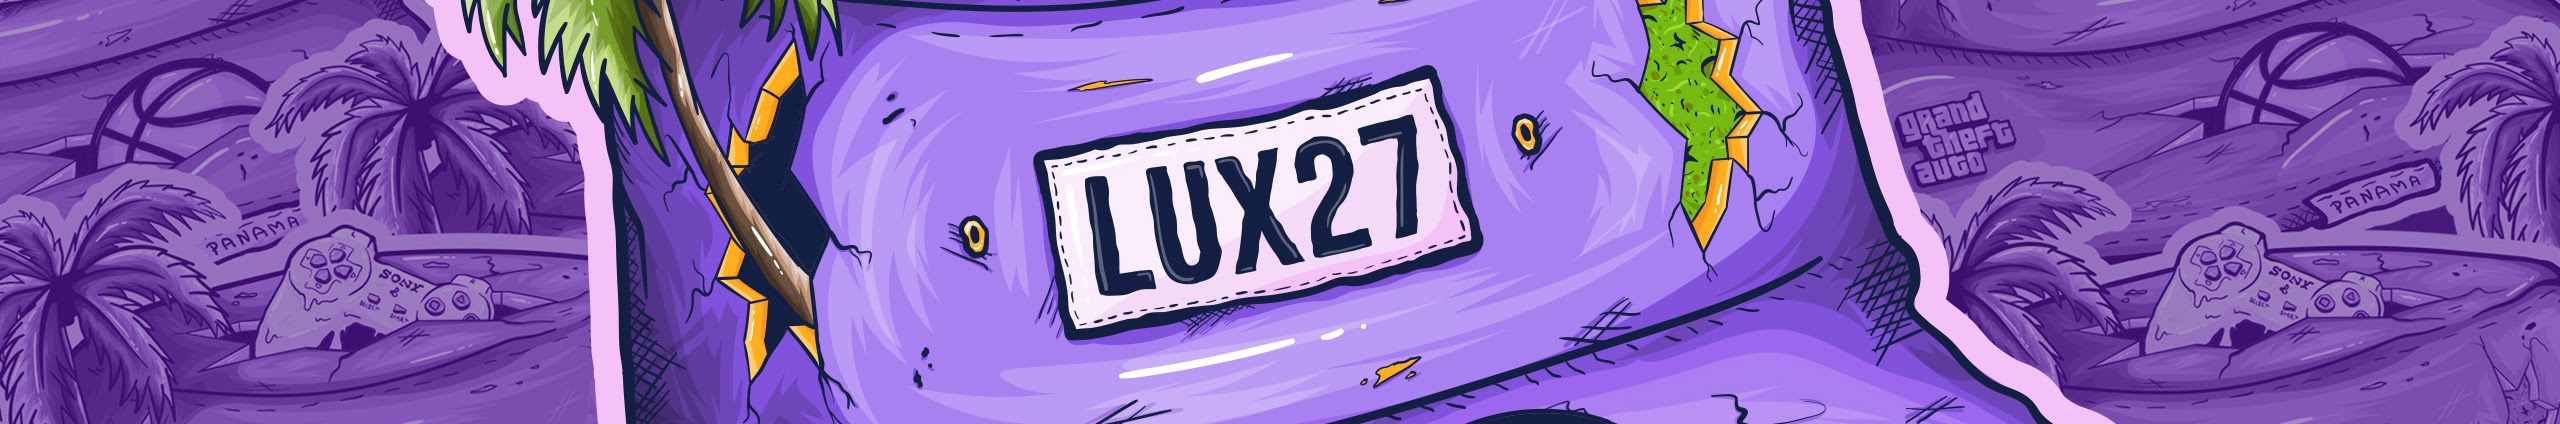 Lux27 - On BiH Link Video